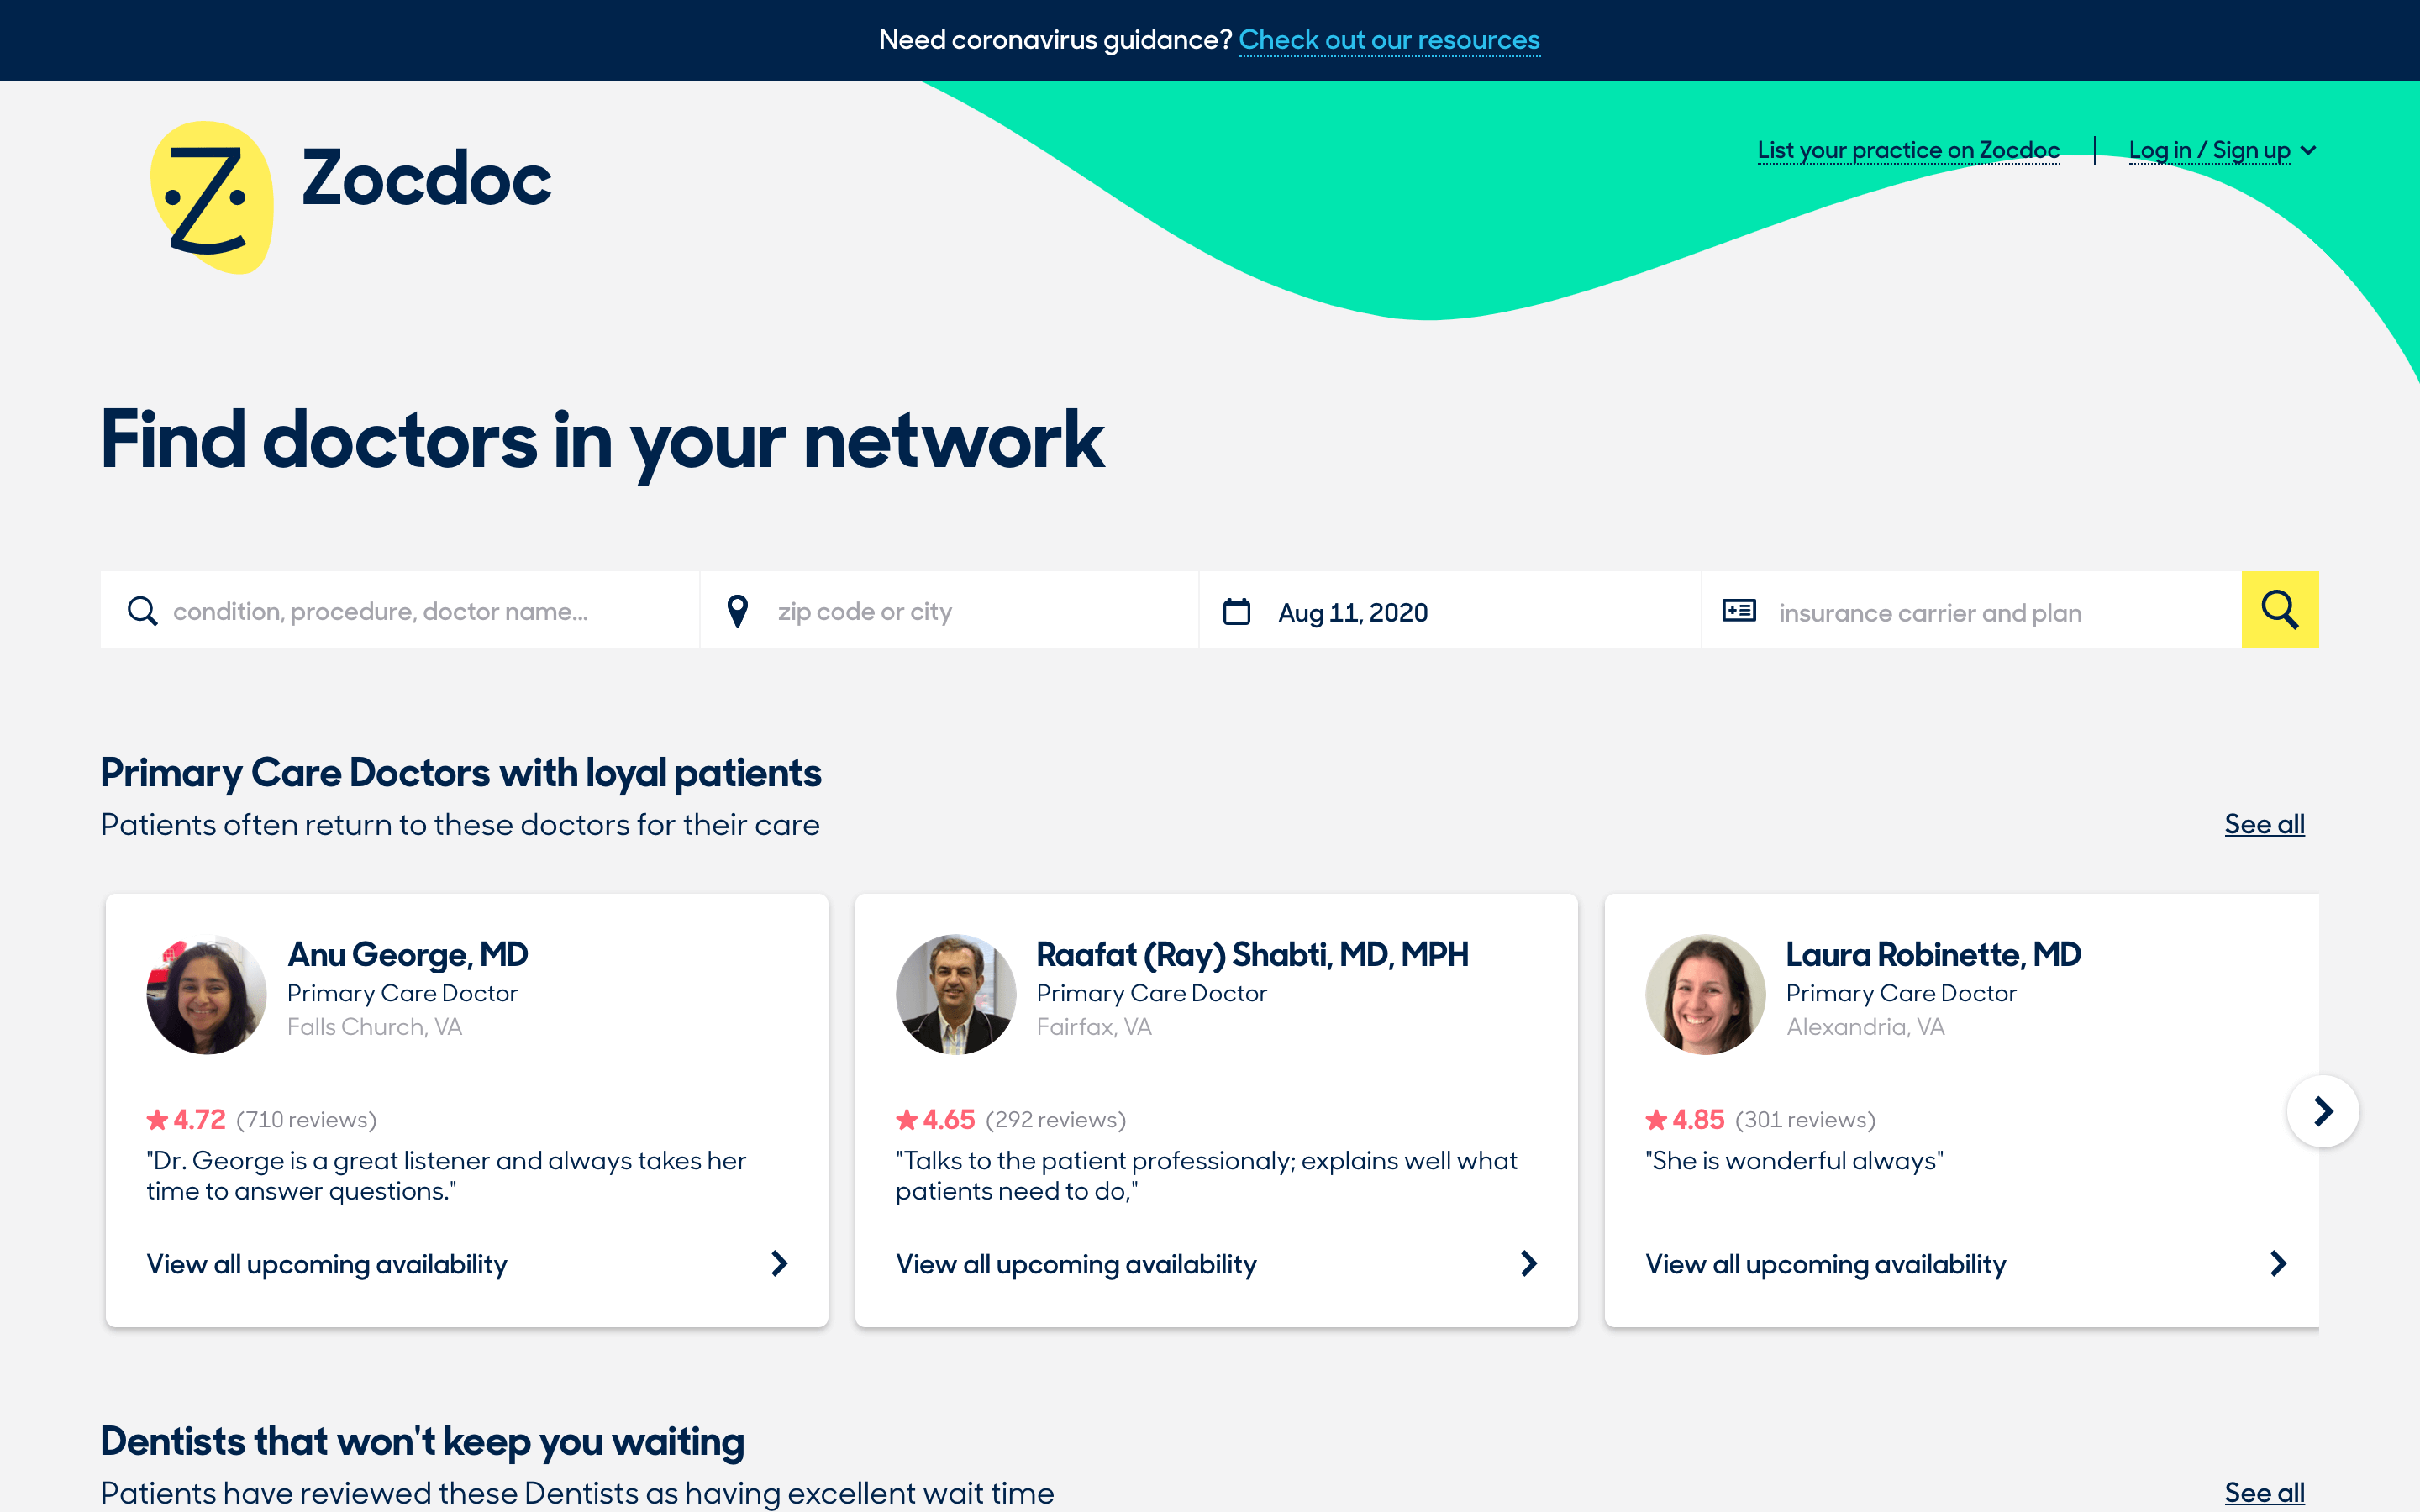 Zocdoc homepage